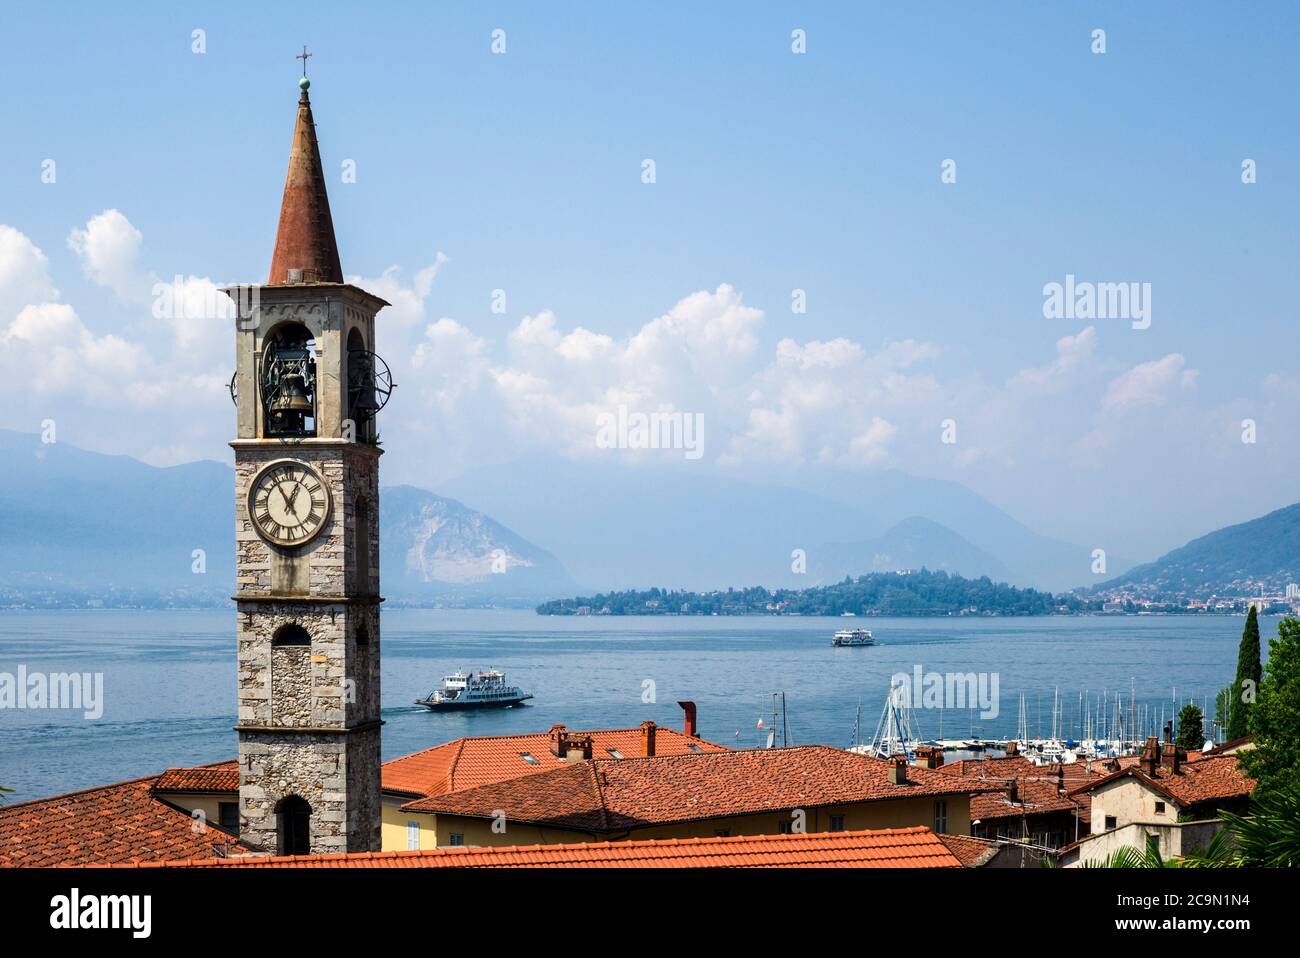 The city of Laveno with lake and Chiesa Vecchia Stock Photo